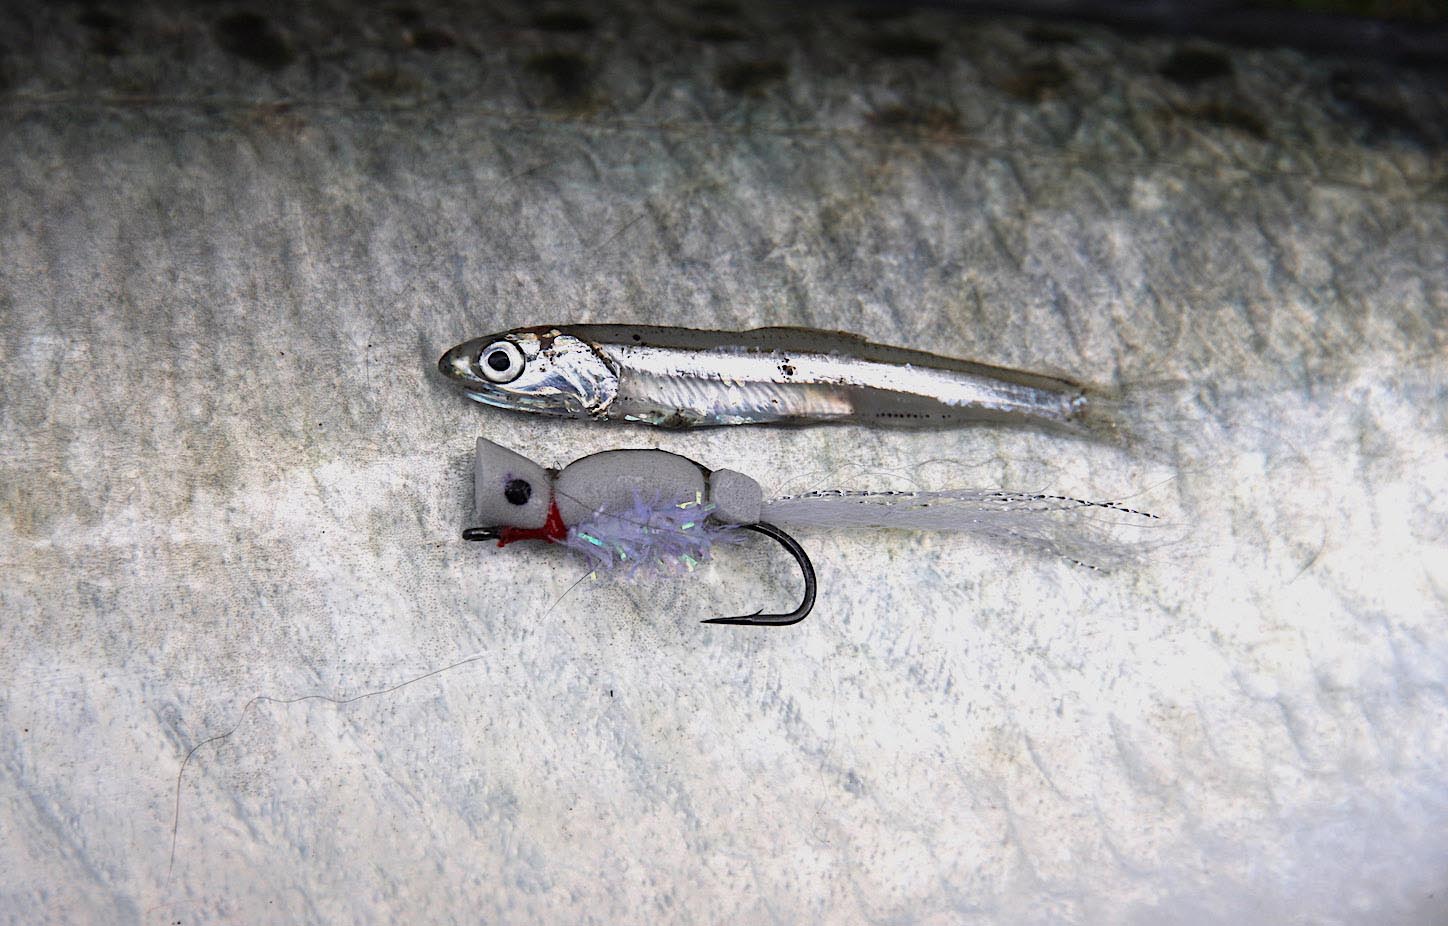 Gurgle pop minnow fly alongside an anchovy recently eaten by a kahawai